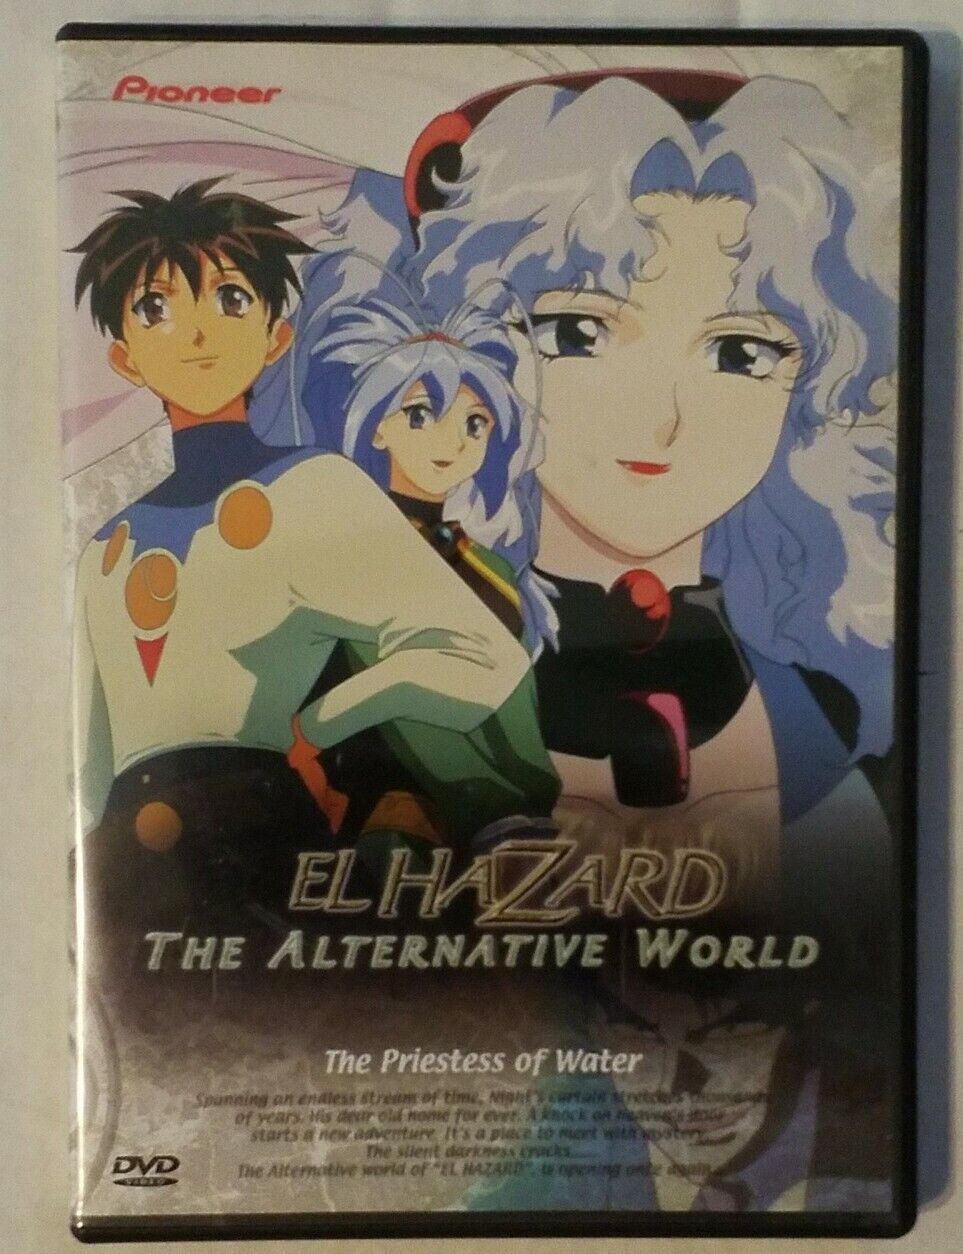 El Hazard: The Alternative World - The Priestess of Water (Anime DVD, 1999)  | eBay